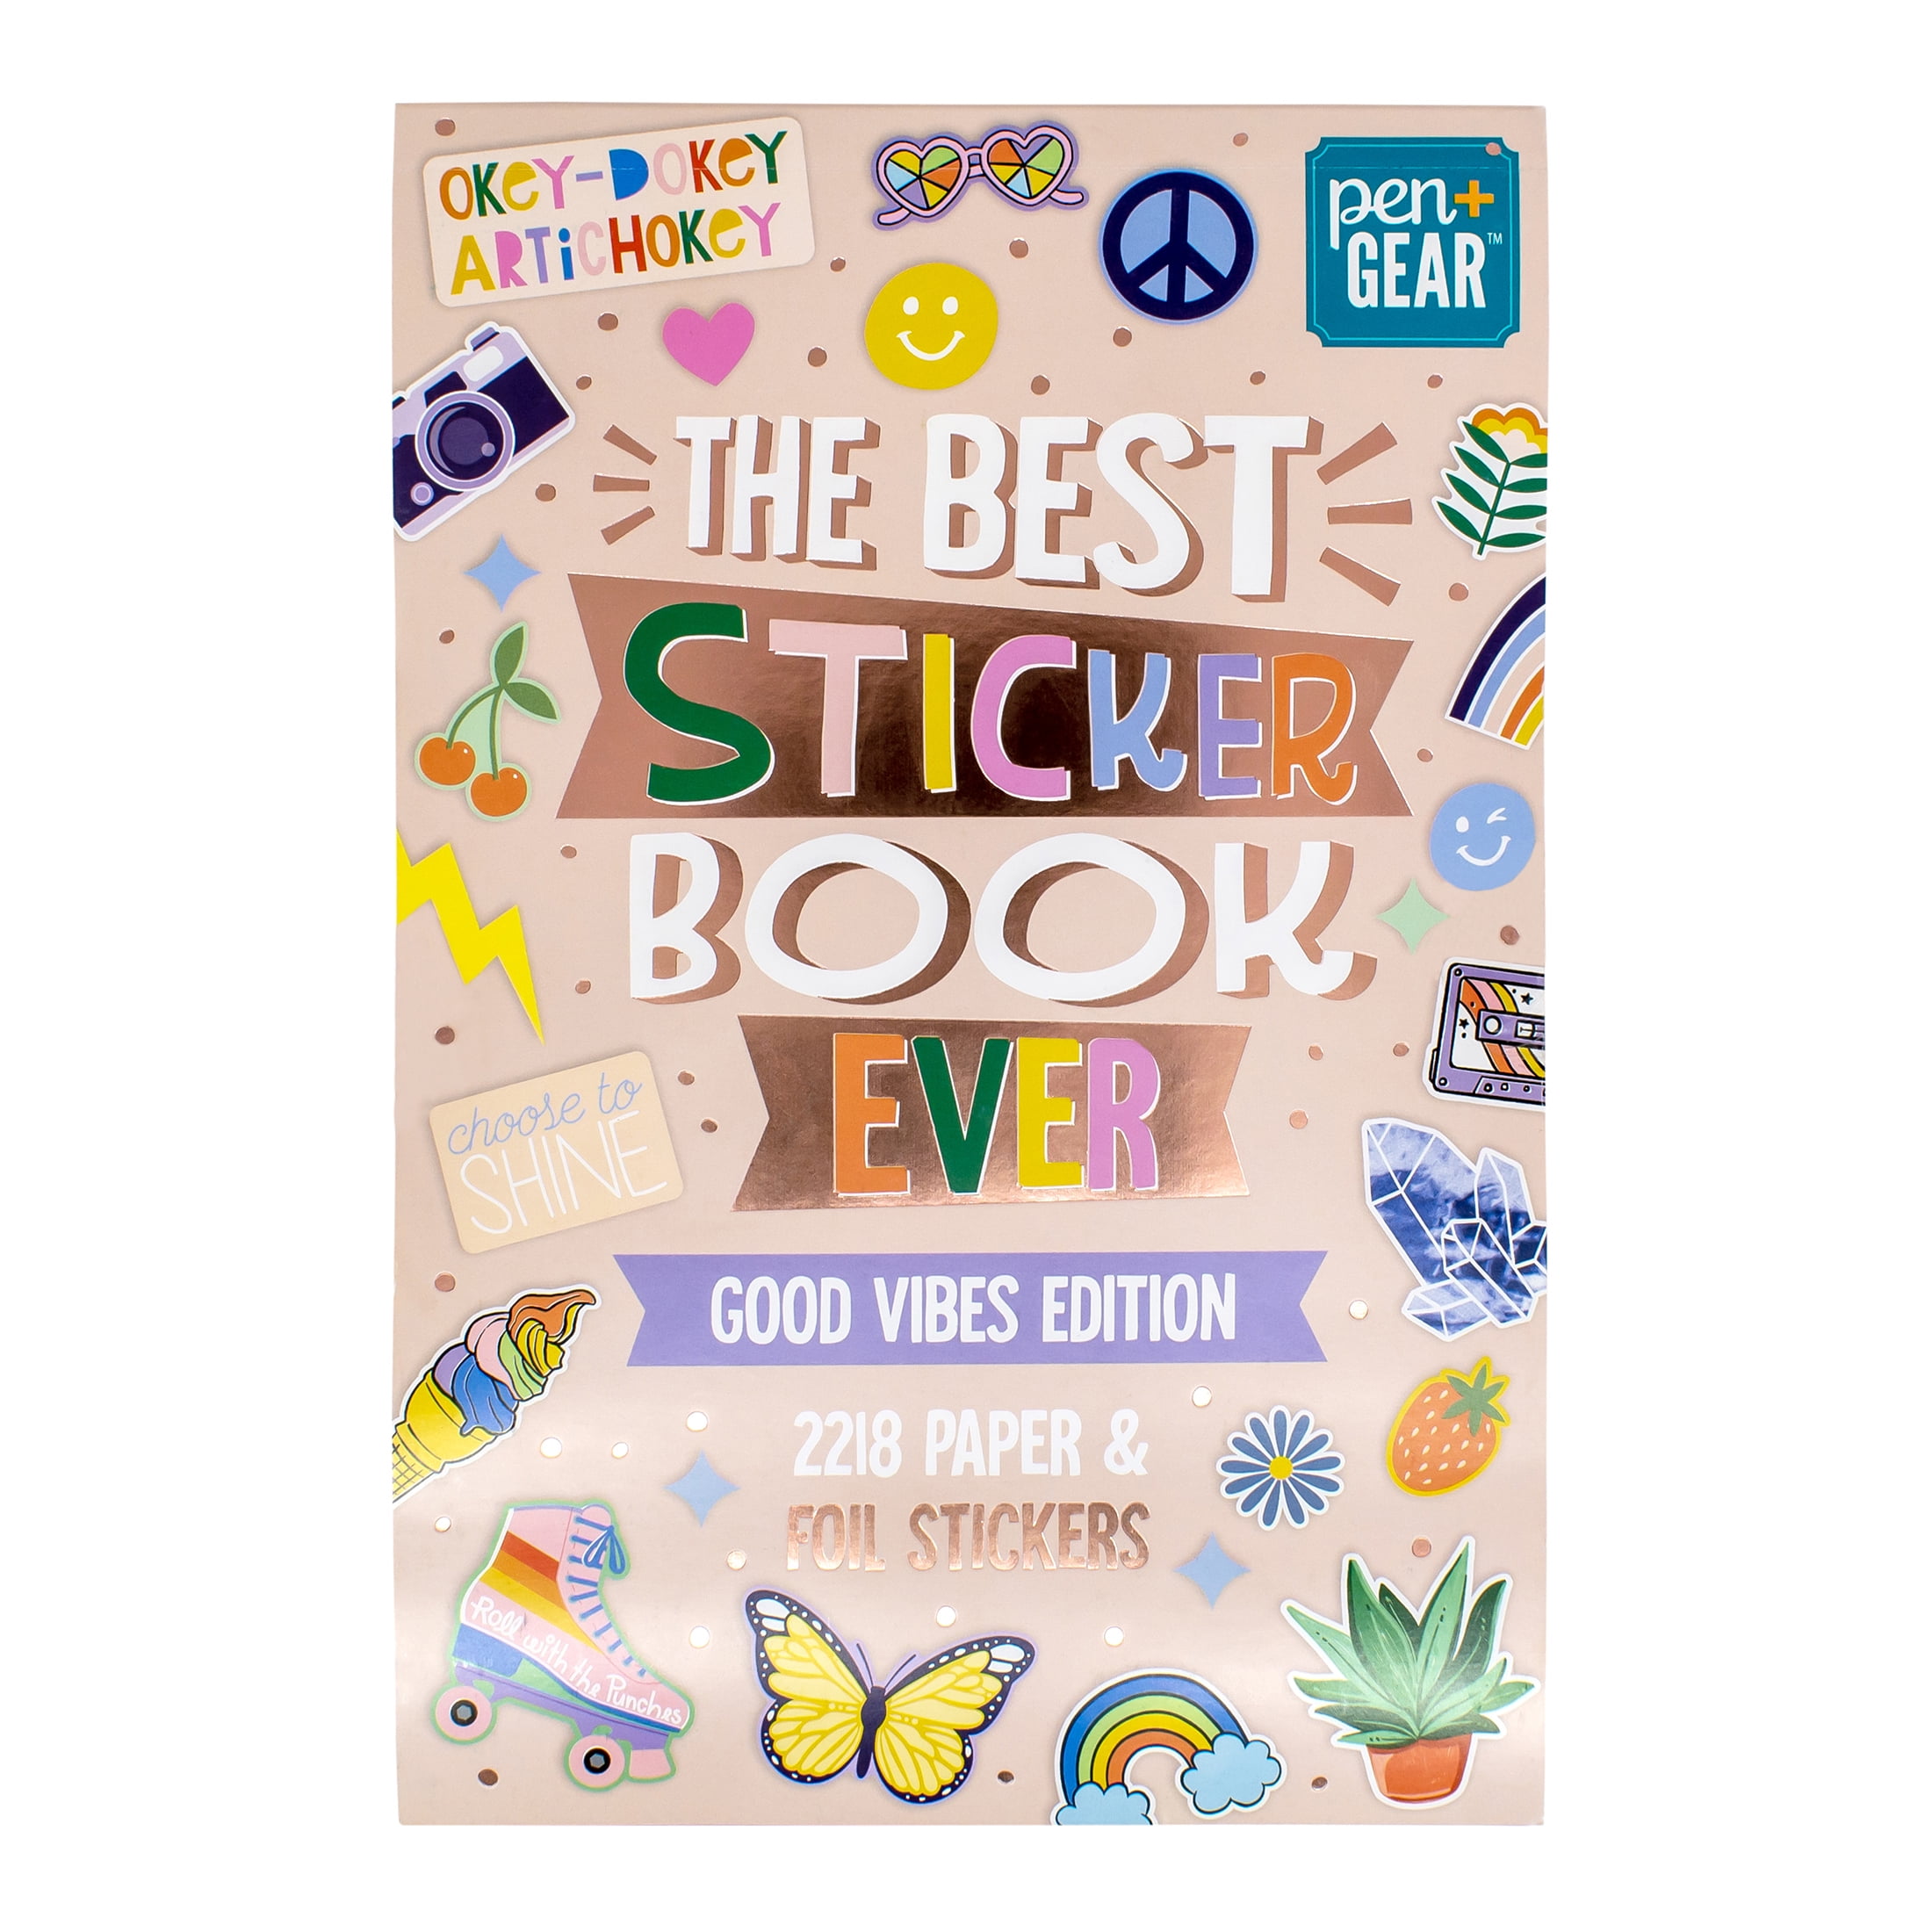 Craft-tastic Sticker It Up Sticker Book | Good Vibes